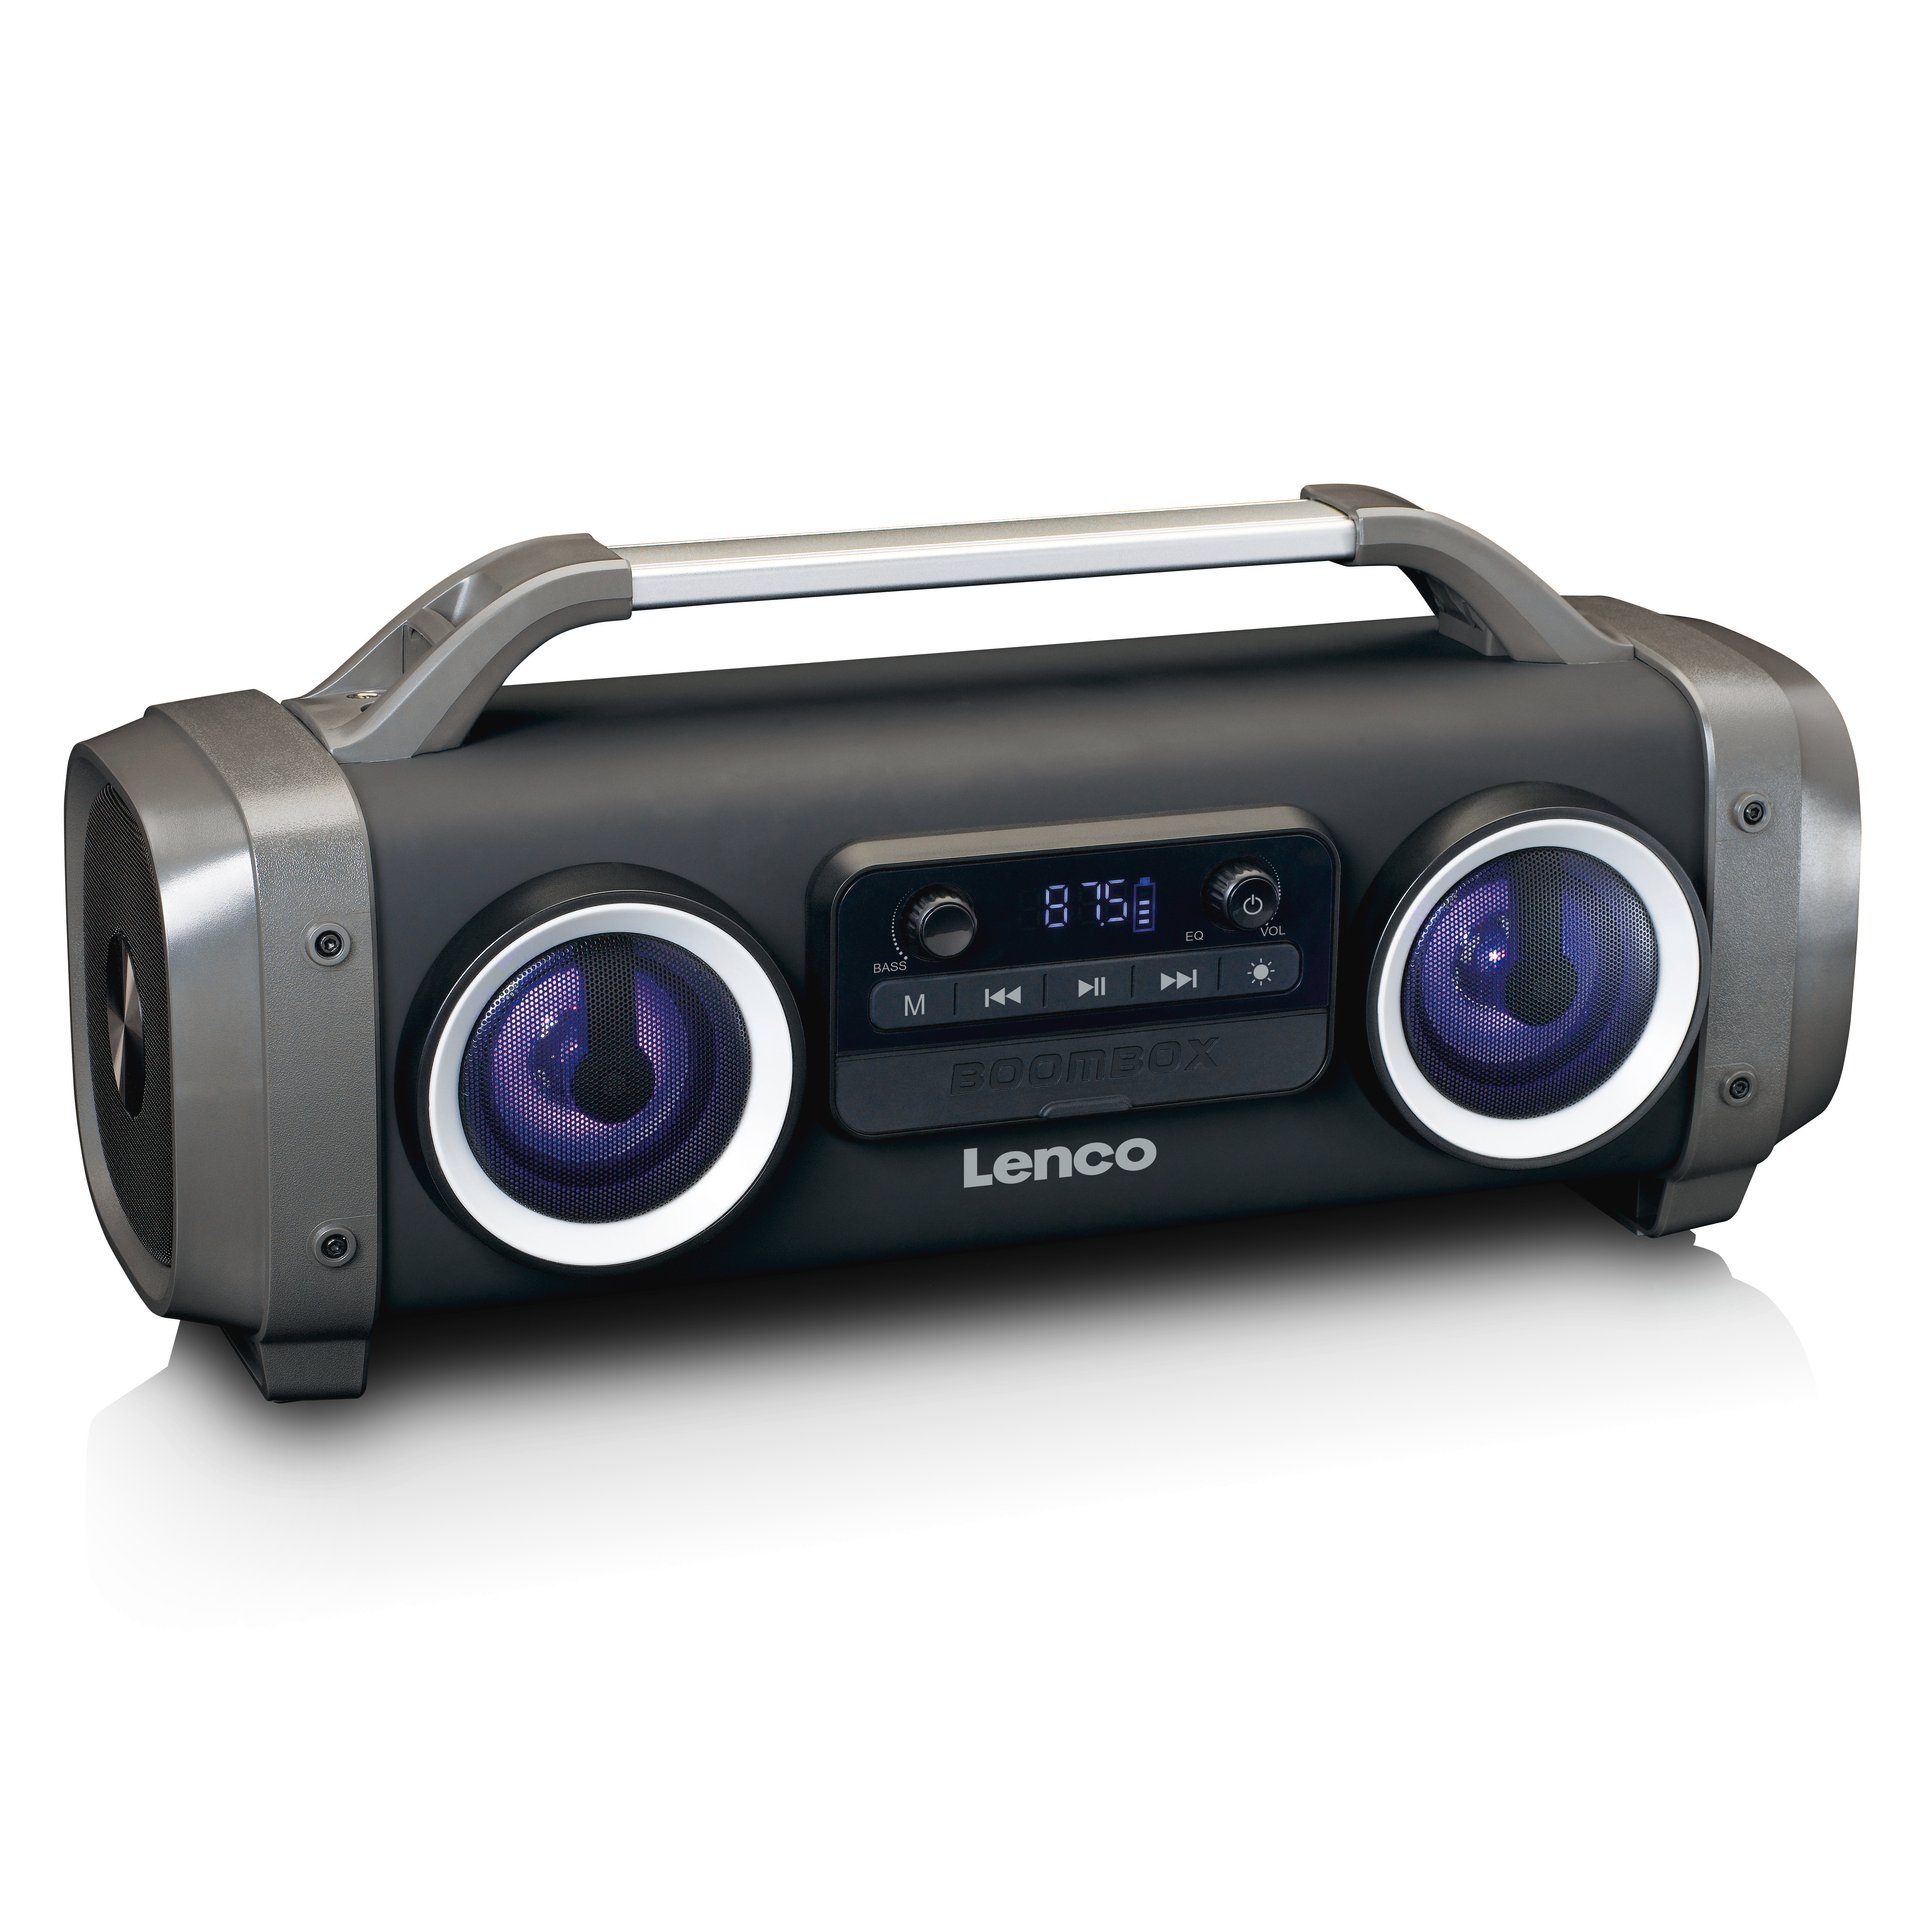 Lenco SPR-100 Tragbares High Power Boombox Radio mit BT, USB, SD, IPX4  Boombox (25 W), Spritzwasserfest